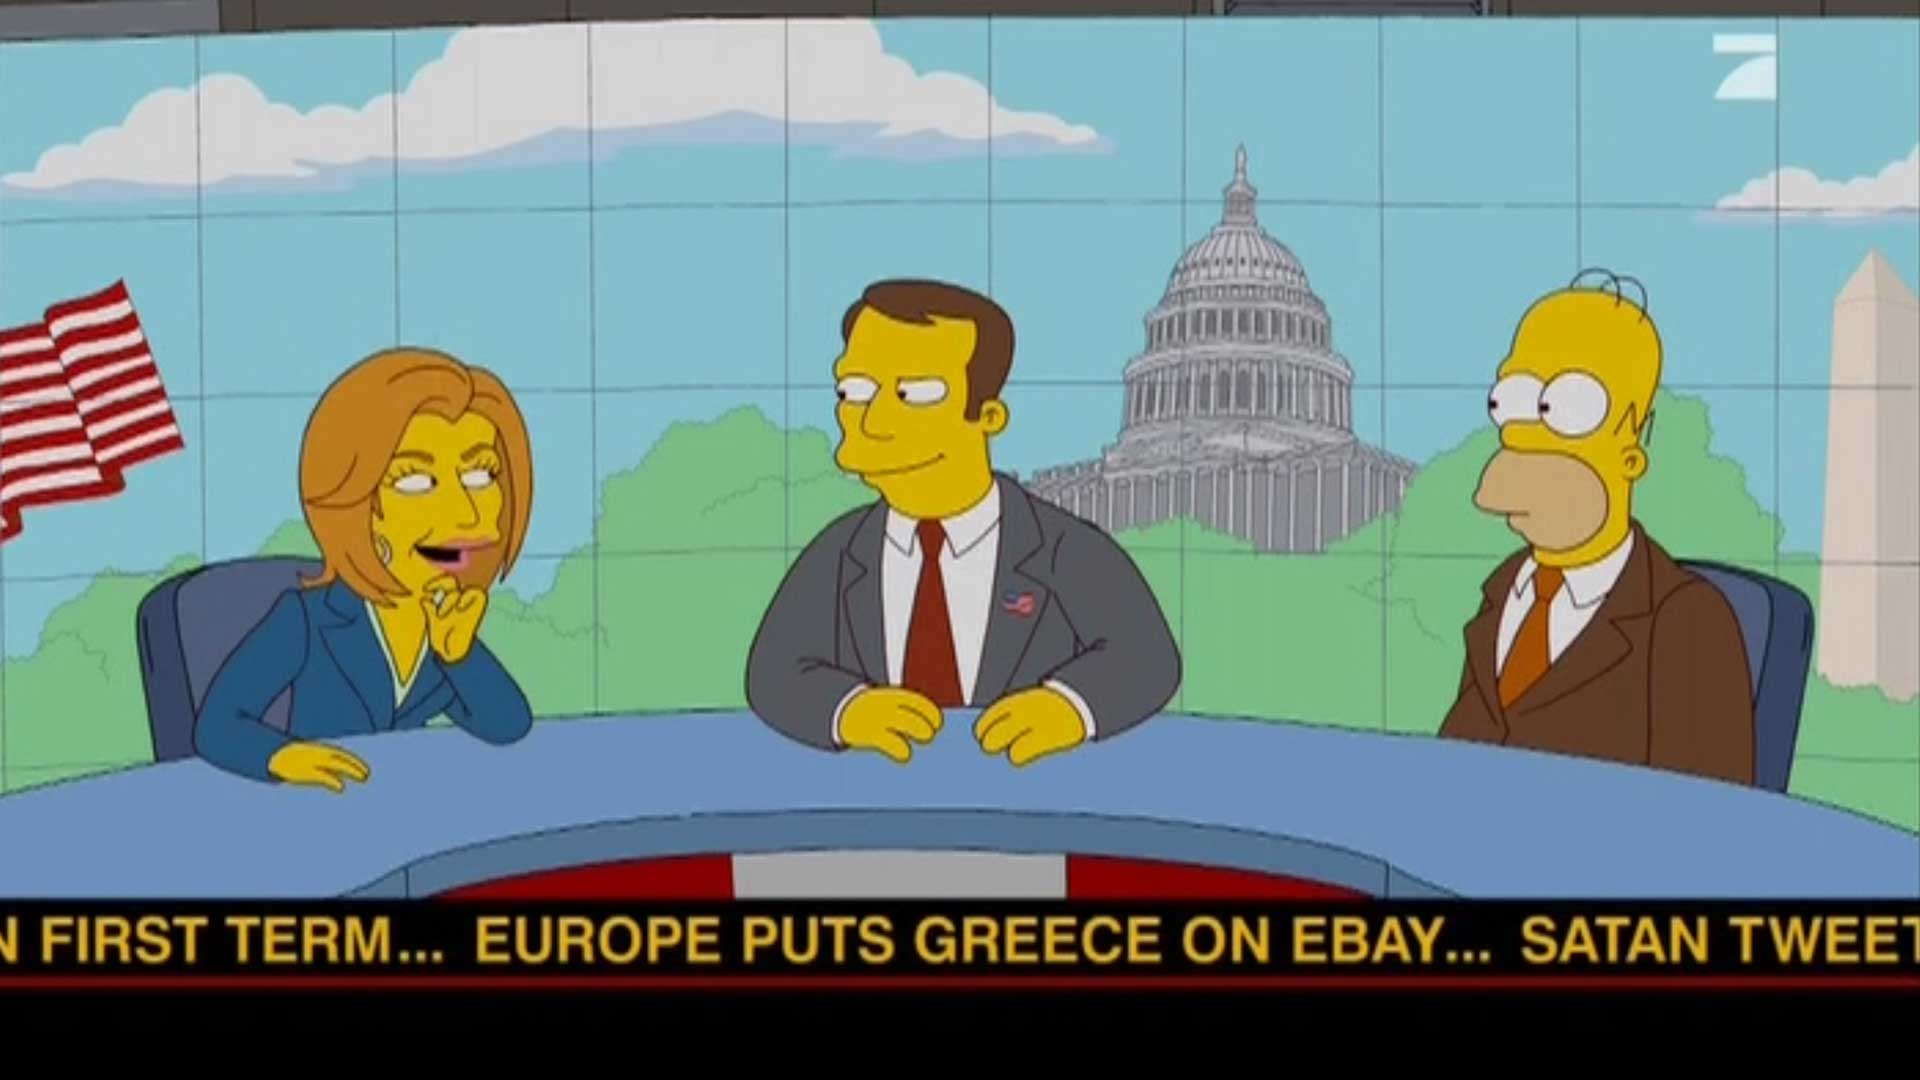 پیشبینی بحران مالی یونان در سریال سیمپسون ها